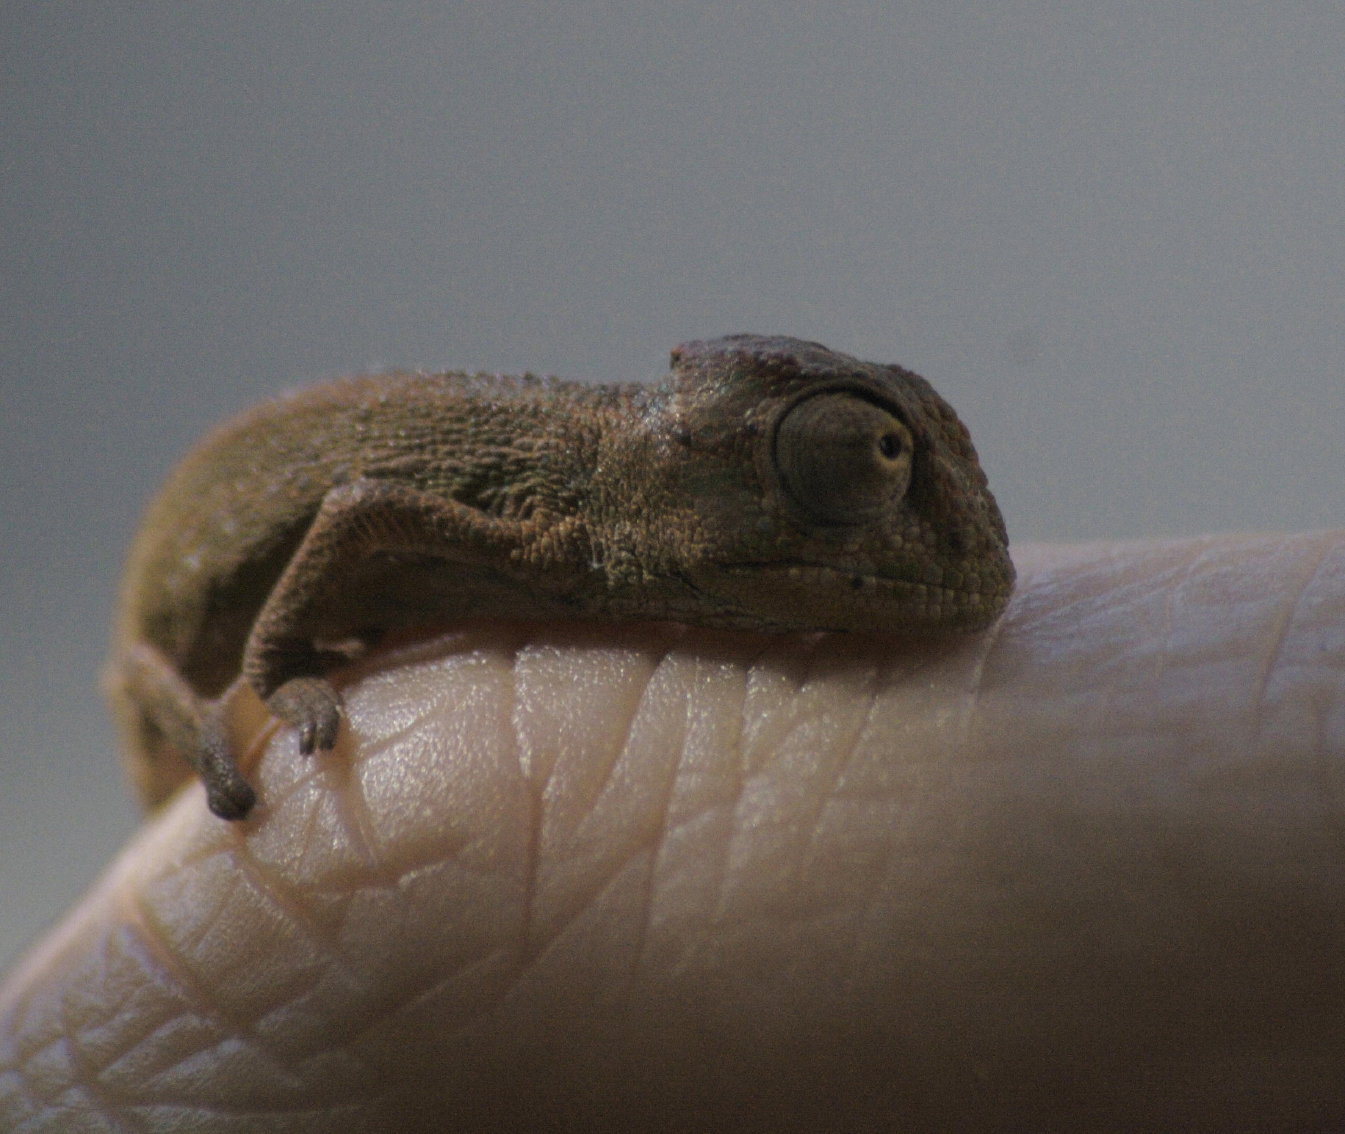 Baby Cape Dwarf Chameleon